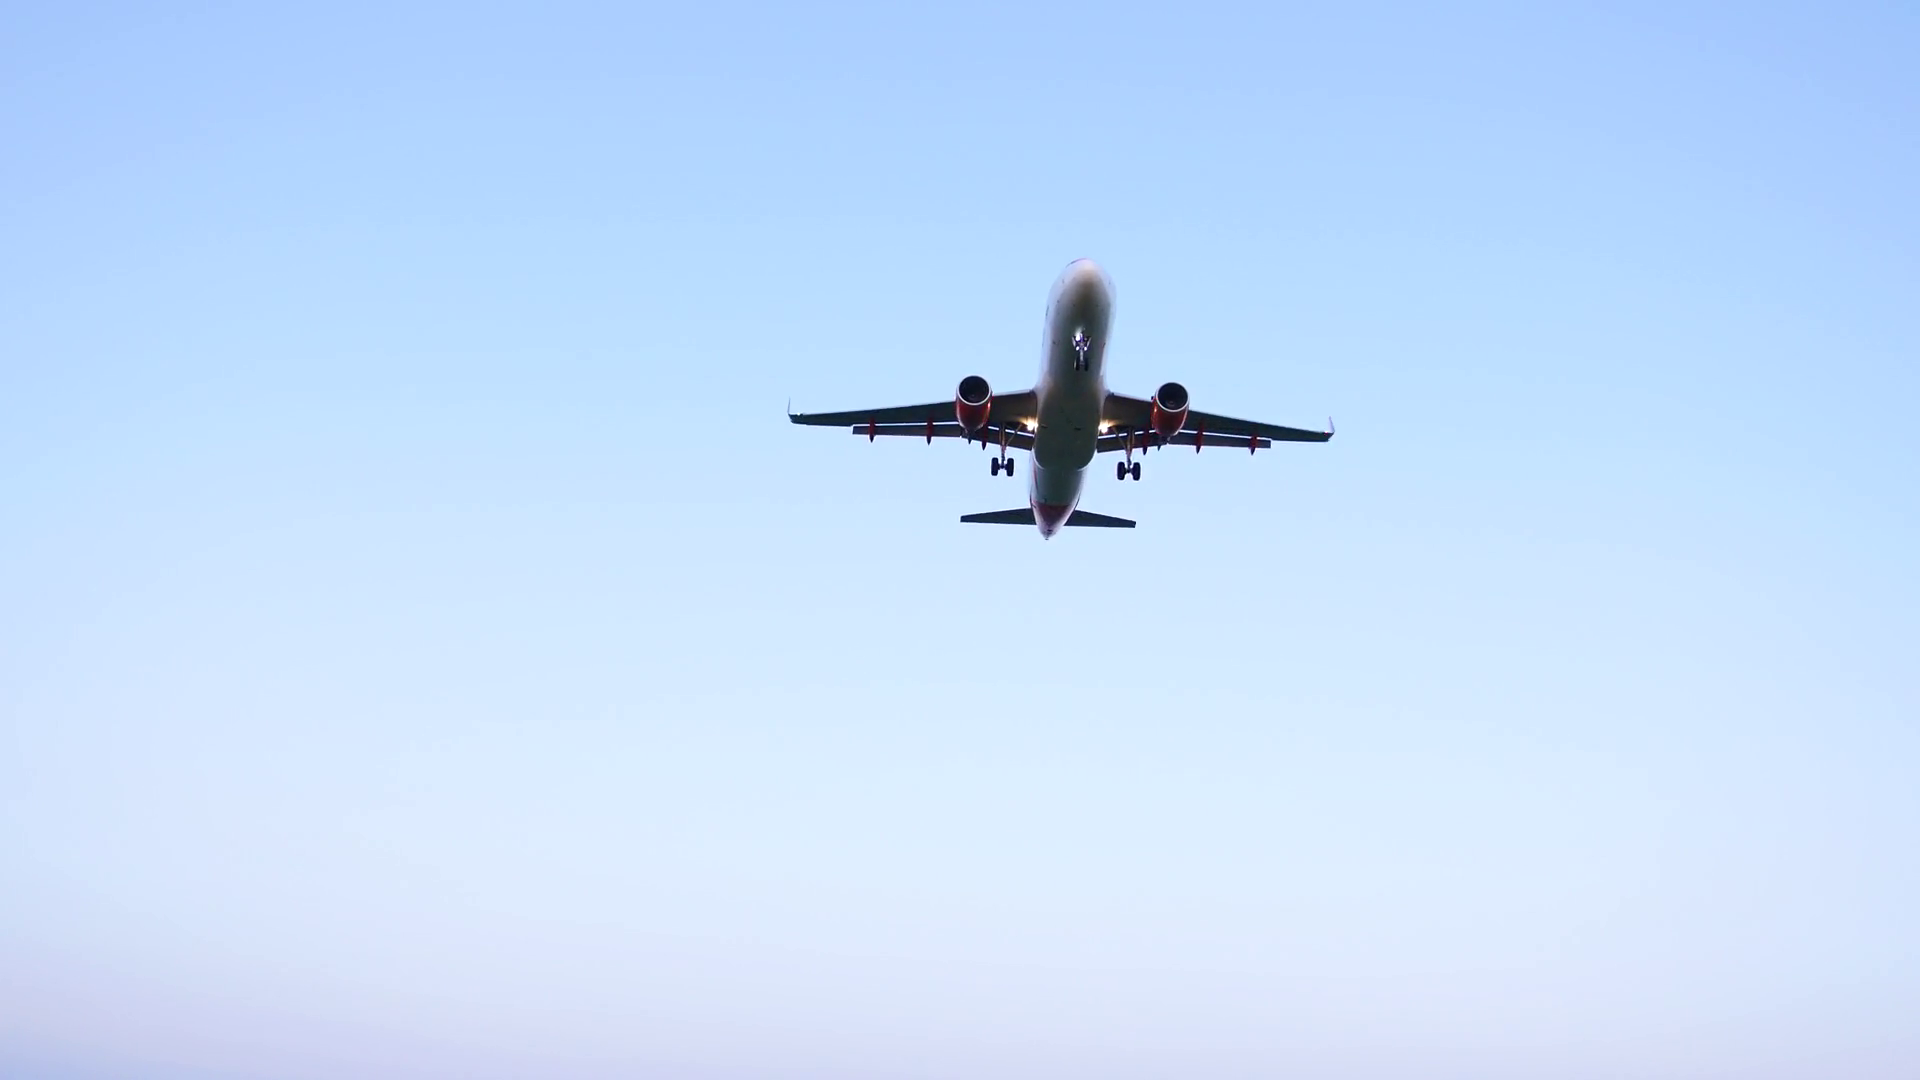 Airplane Flying Overhead against Blue Sky - Taking Off / Landing ...